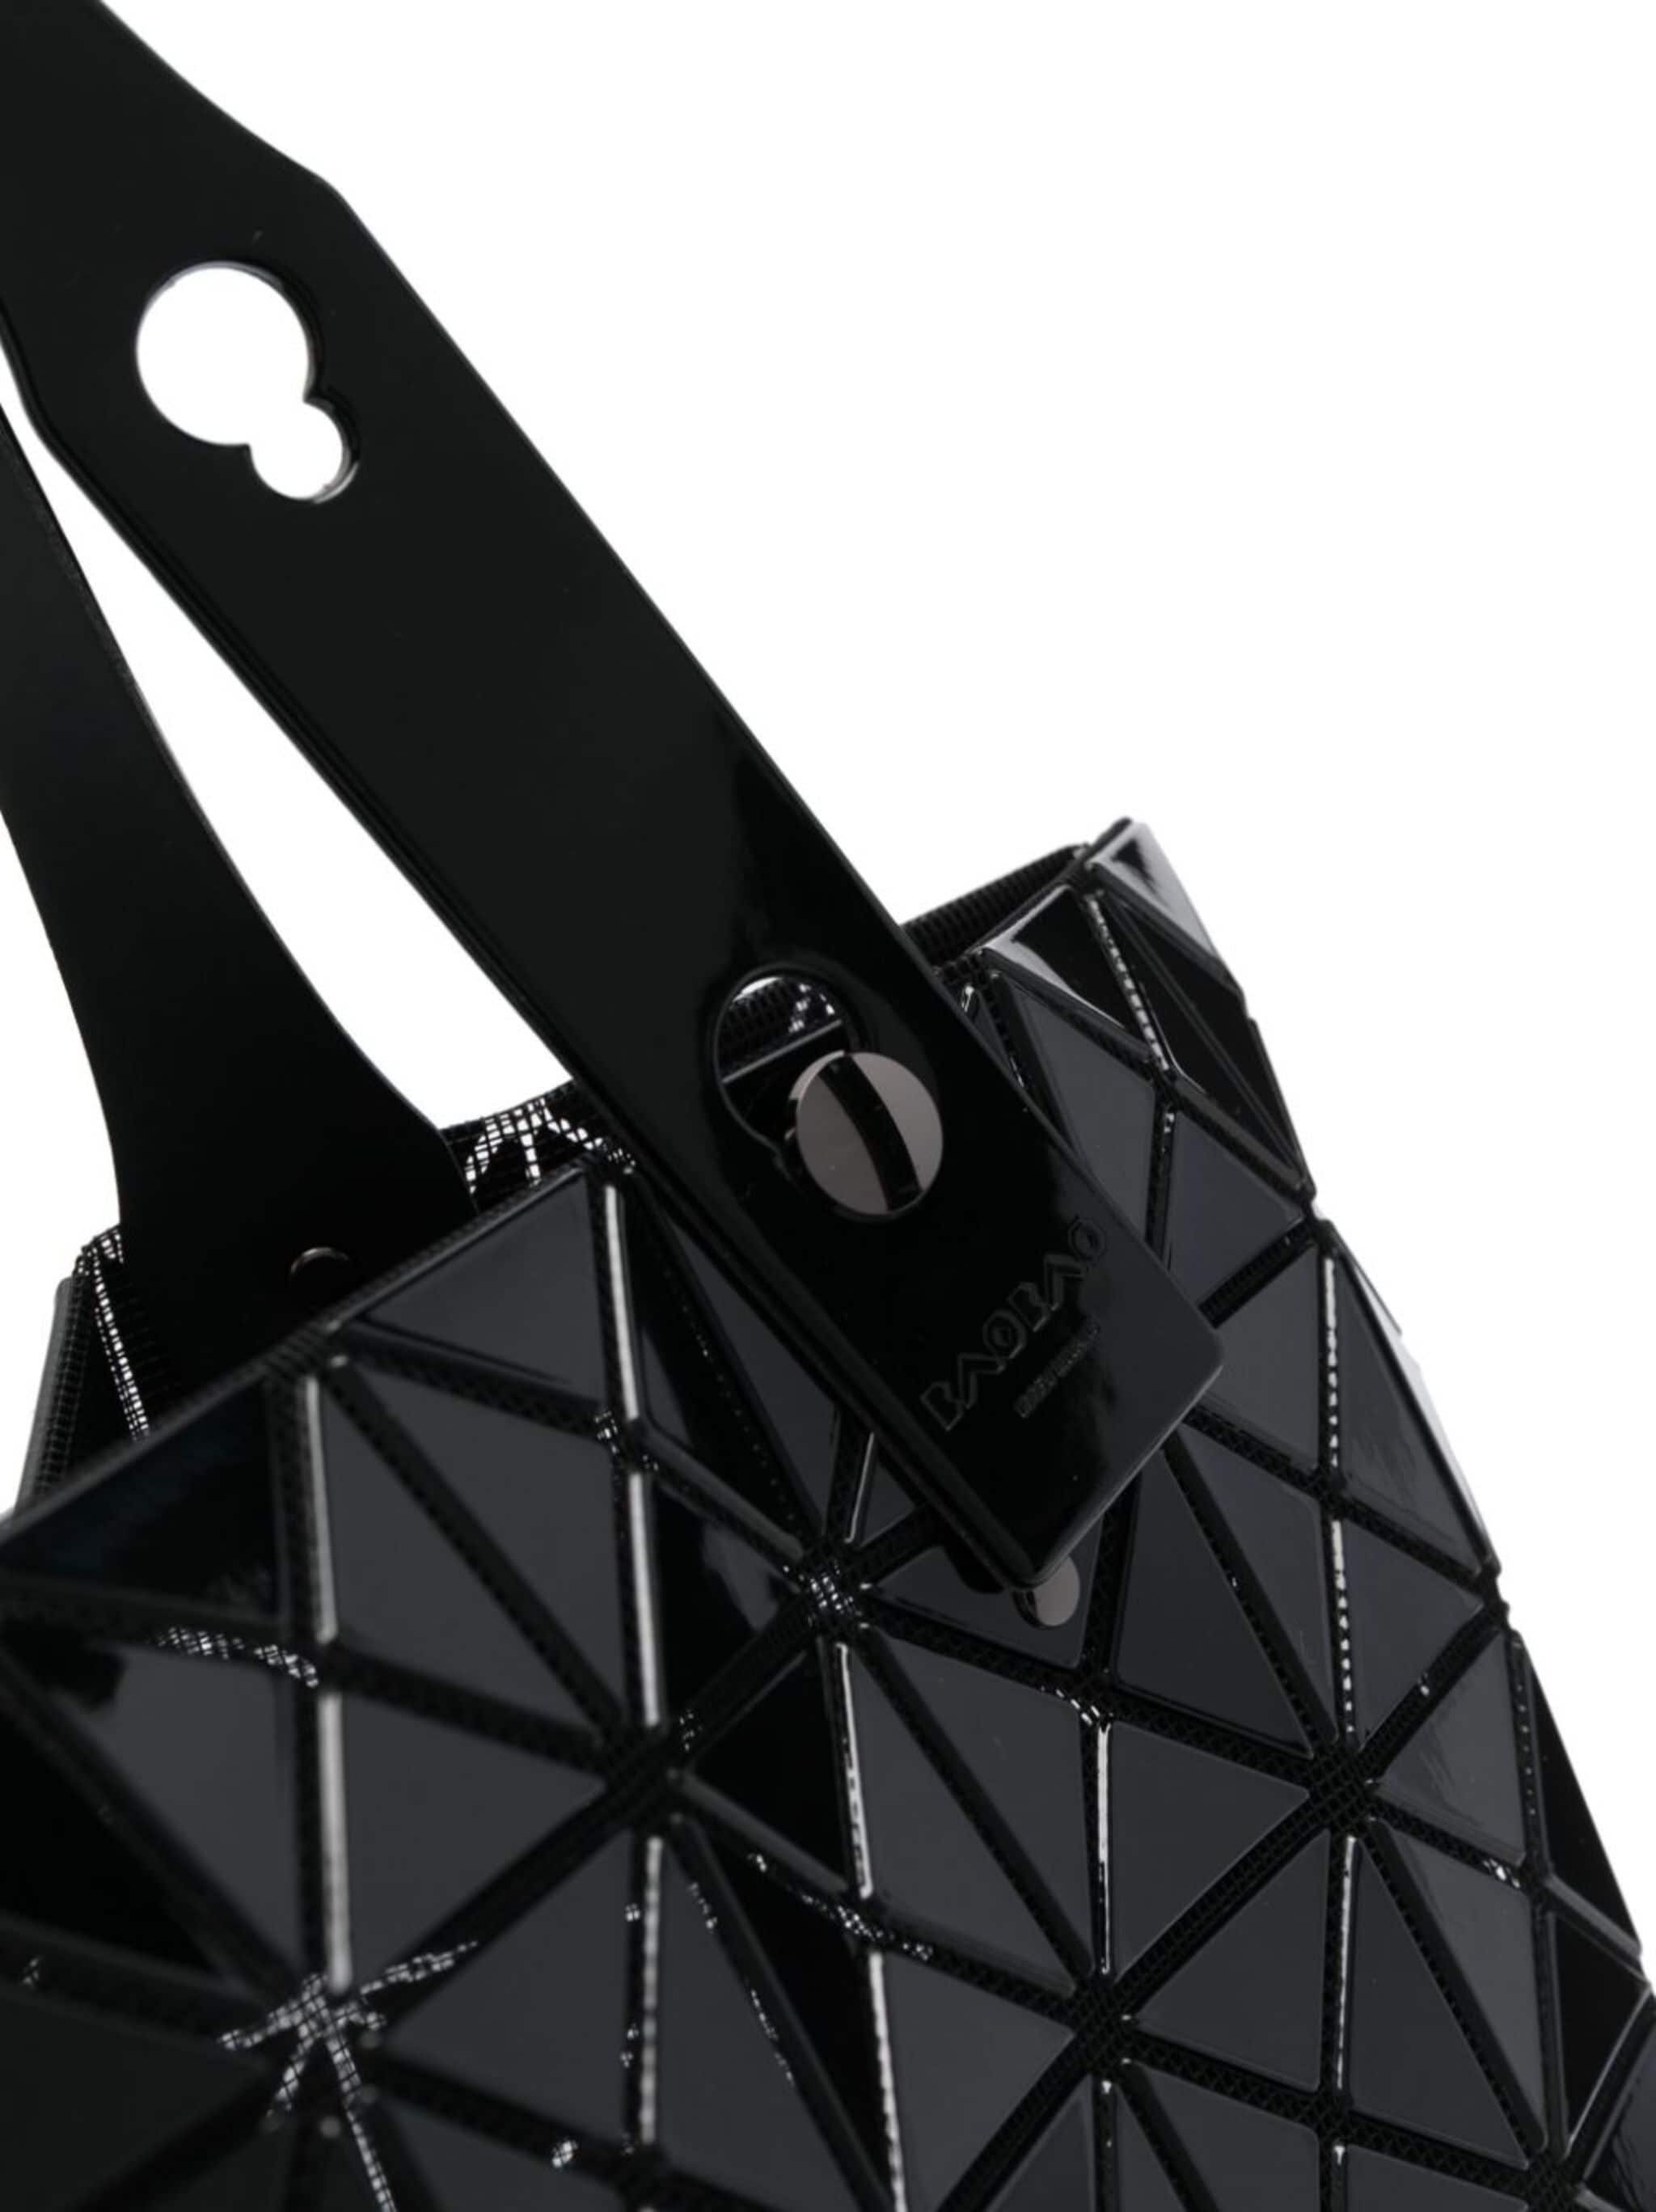 Bao Bao Issey Miyake Geometric-Pattern Faux-Leather Shoulder Bag